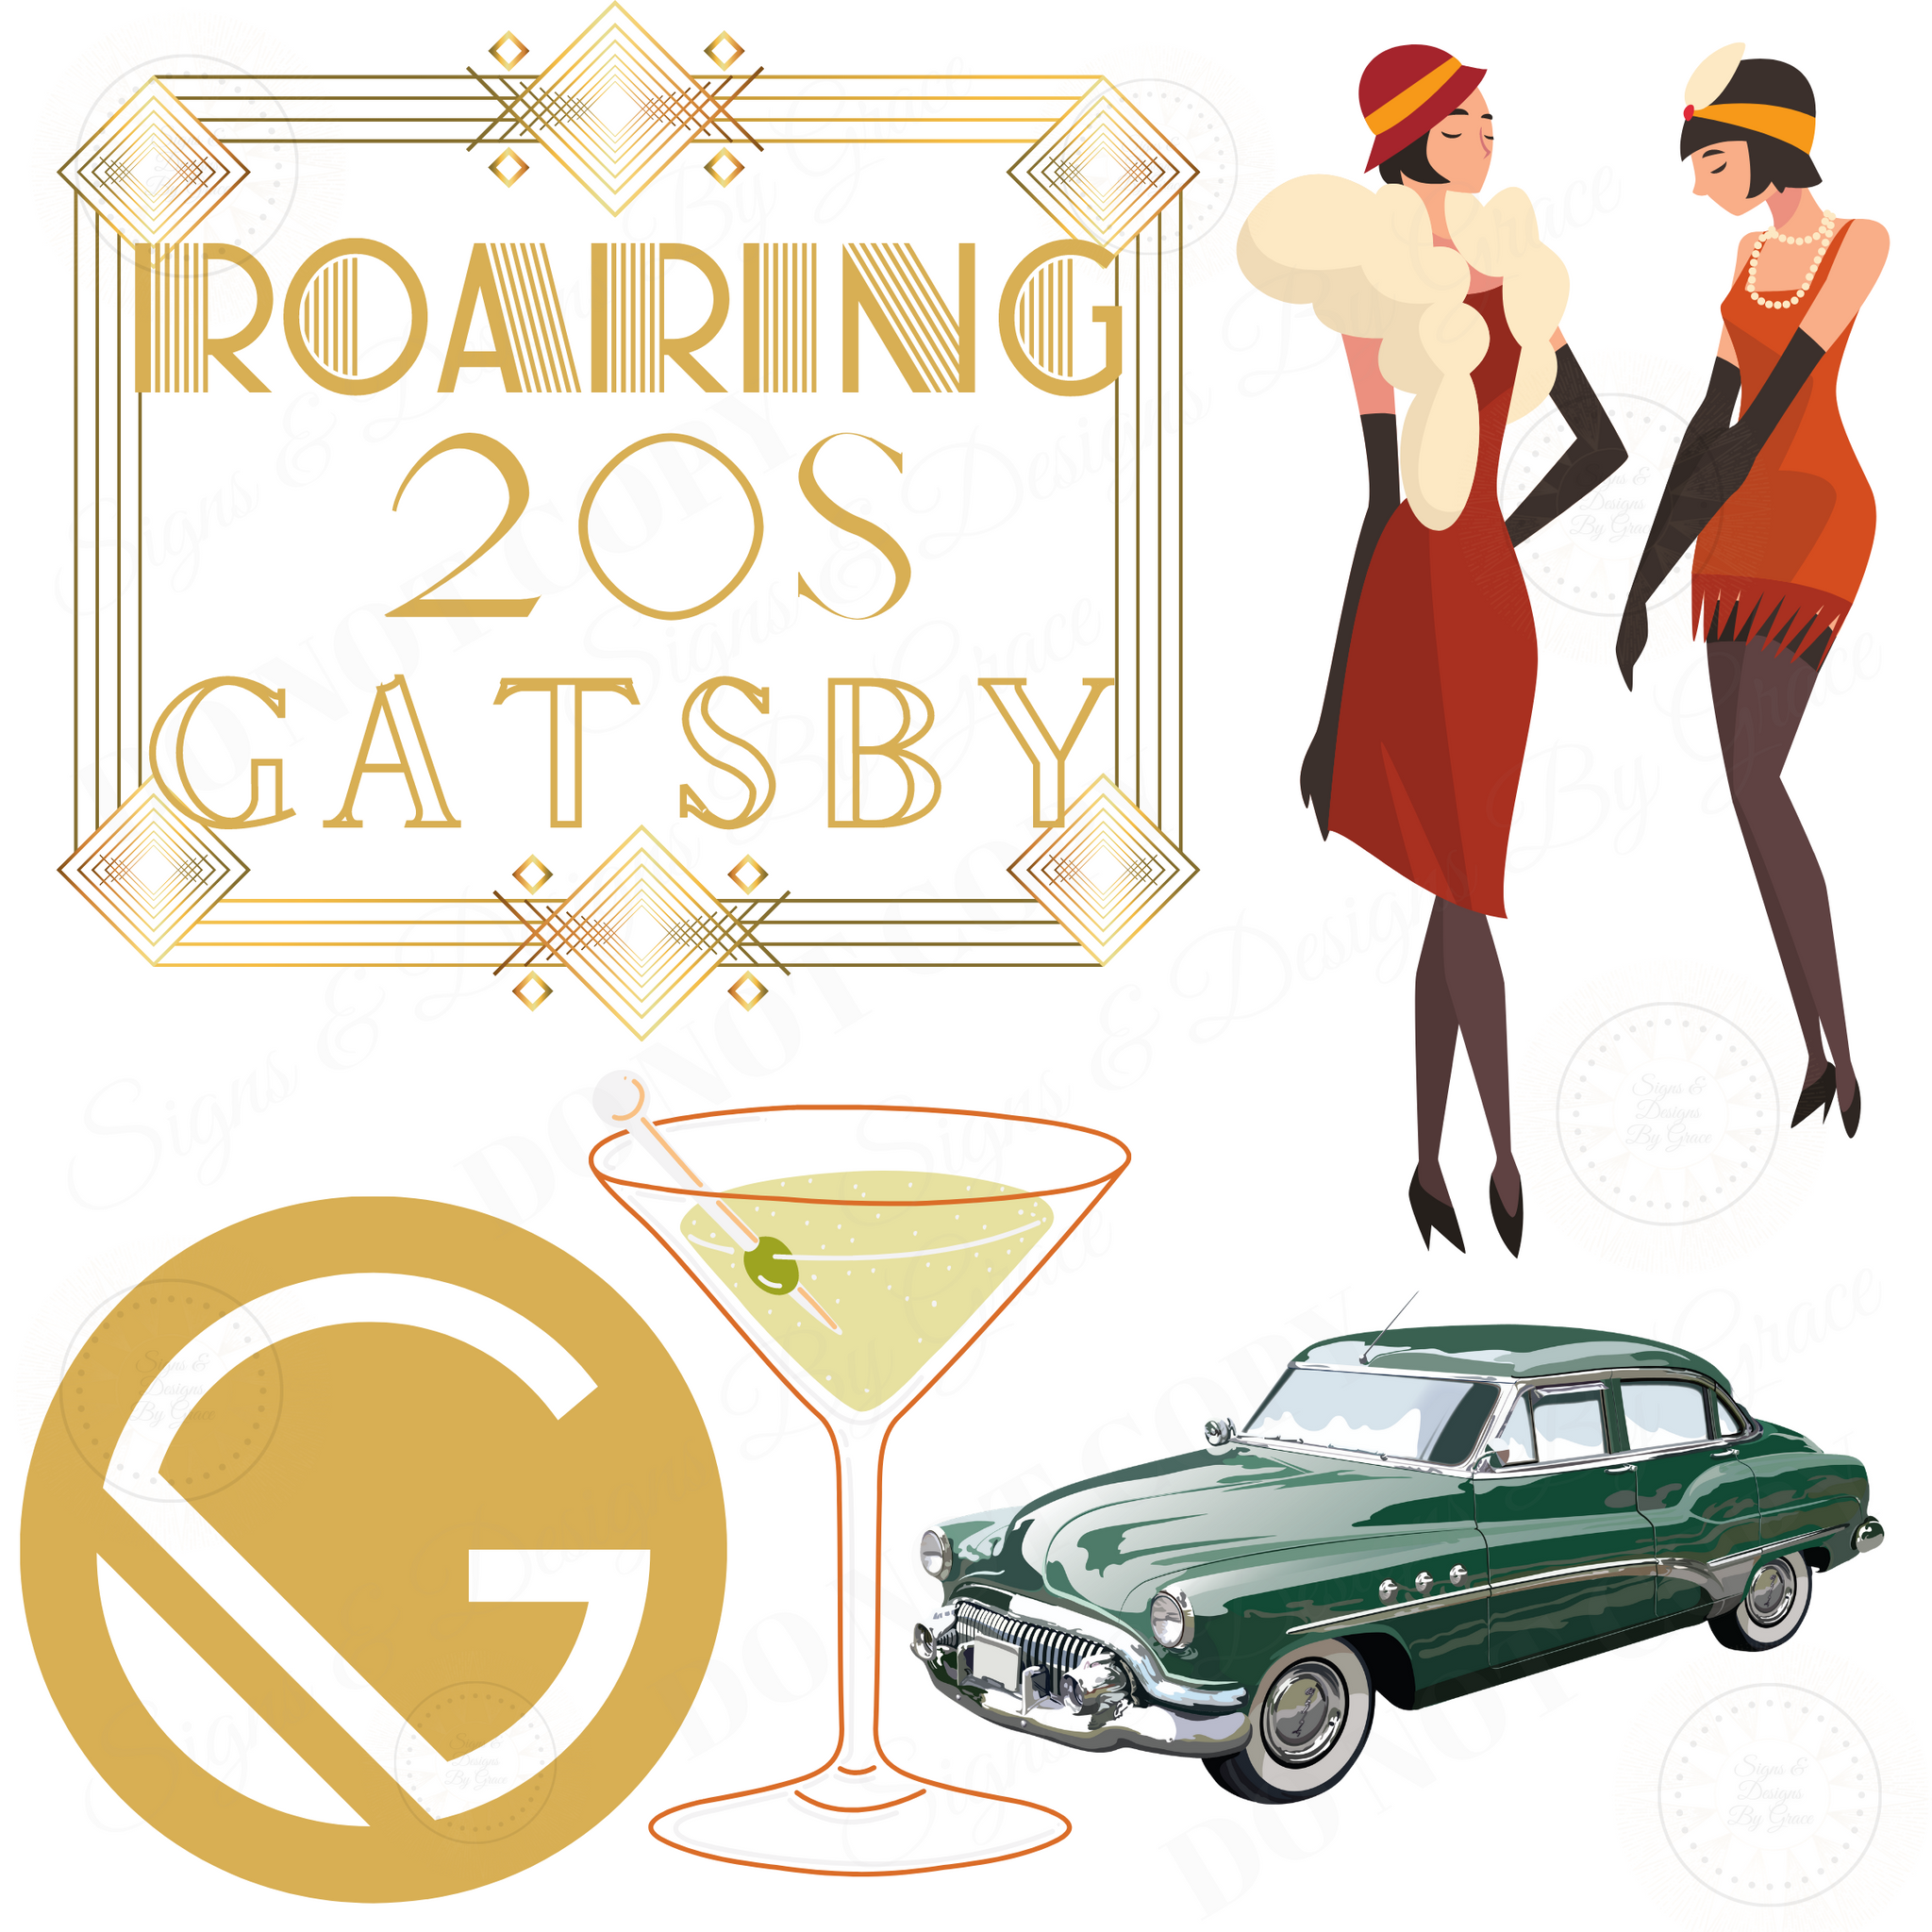 Gatsby roaring 20s 1004